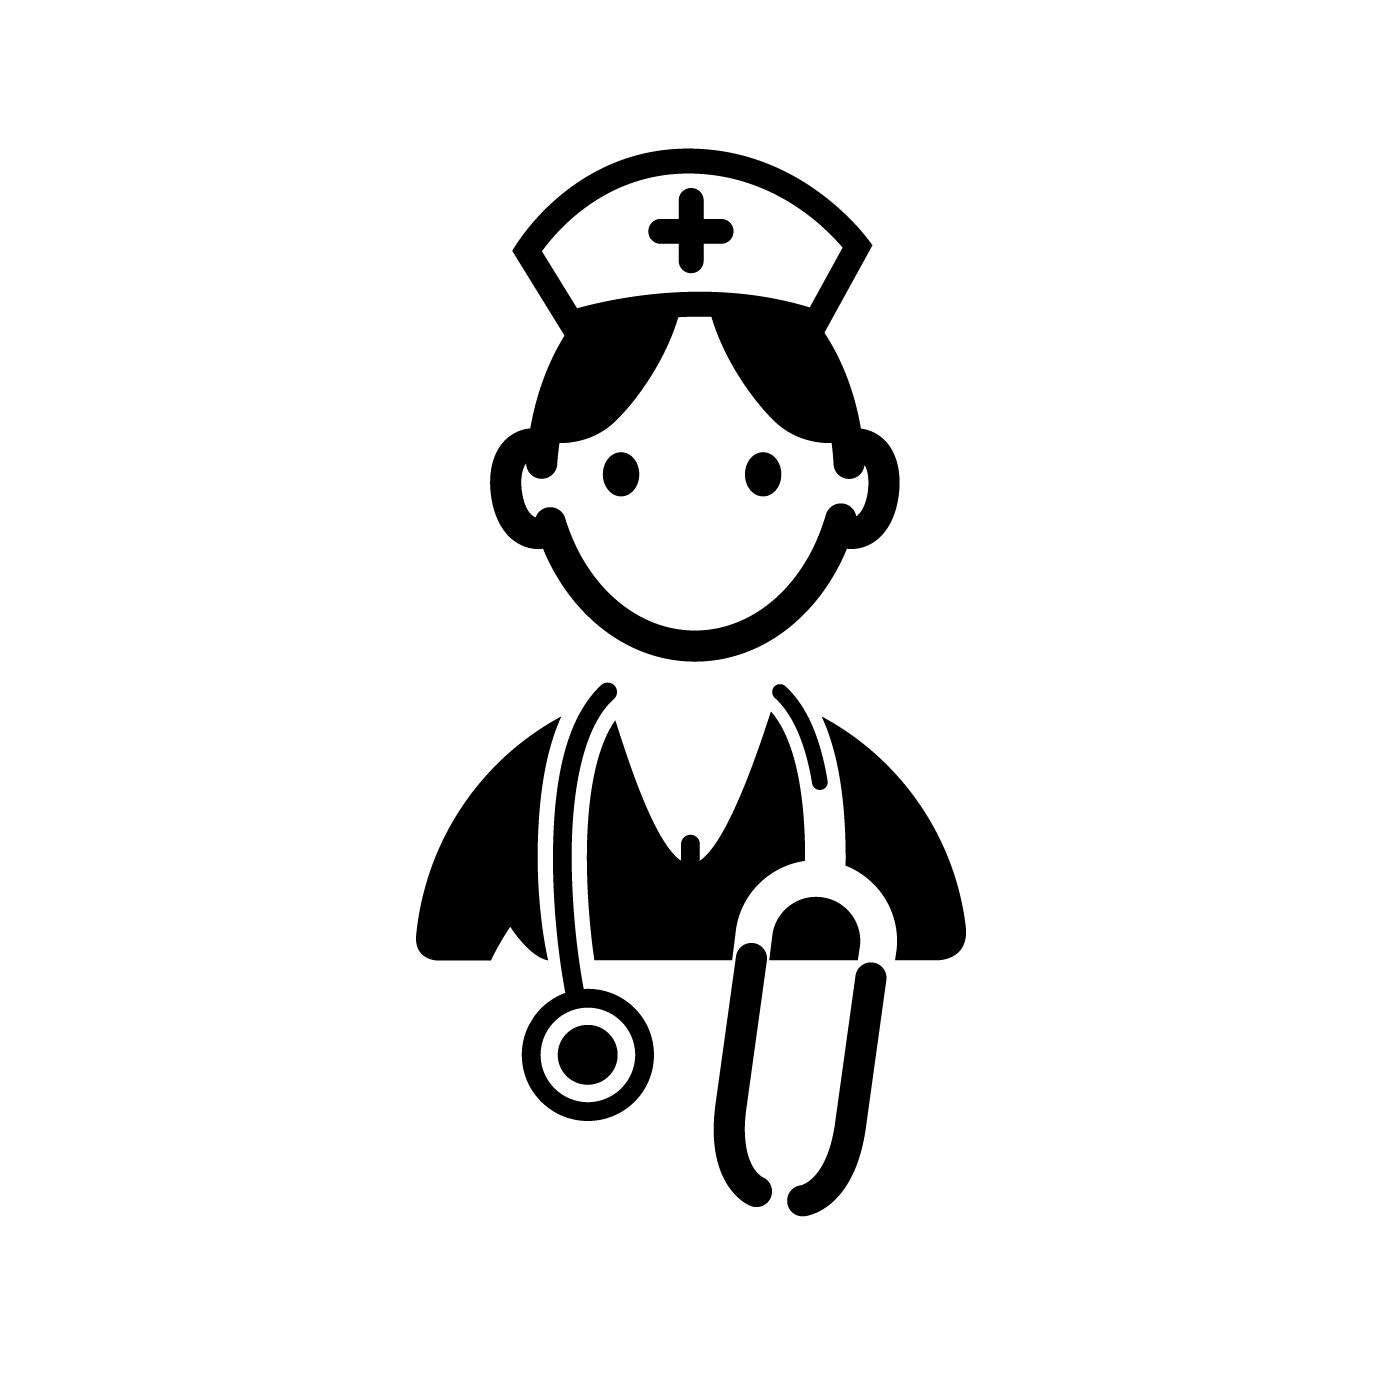 Nurisng Logo - Free Registered Nurse Cliparts, Download Free Clip Art, Free Clip ...